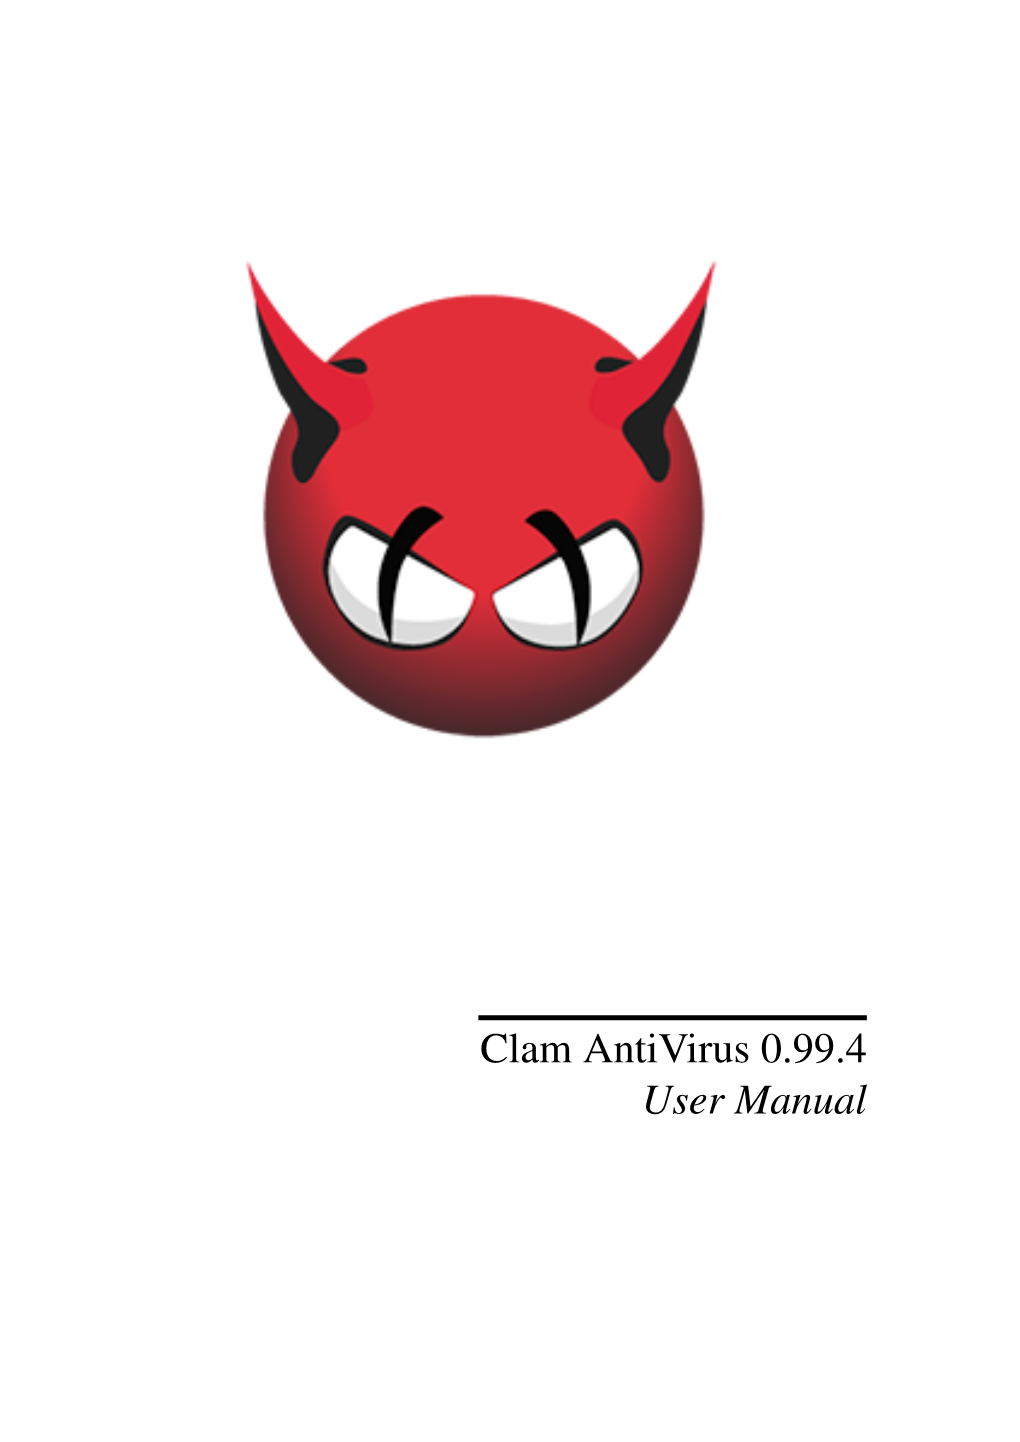 Clam Antivirus 0.99.4 User Manual Contents 1